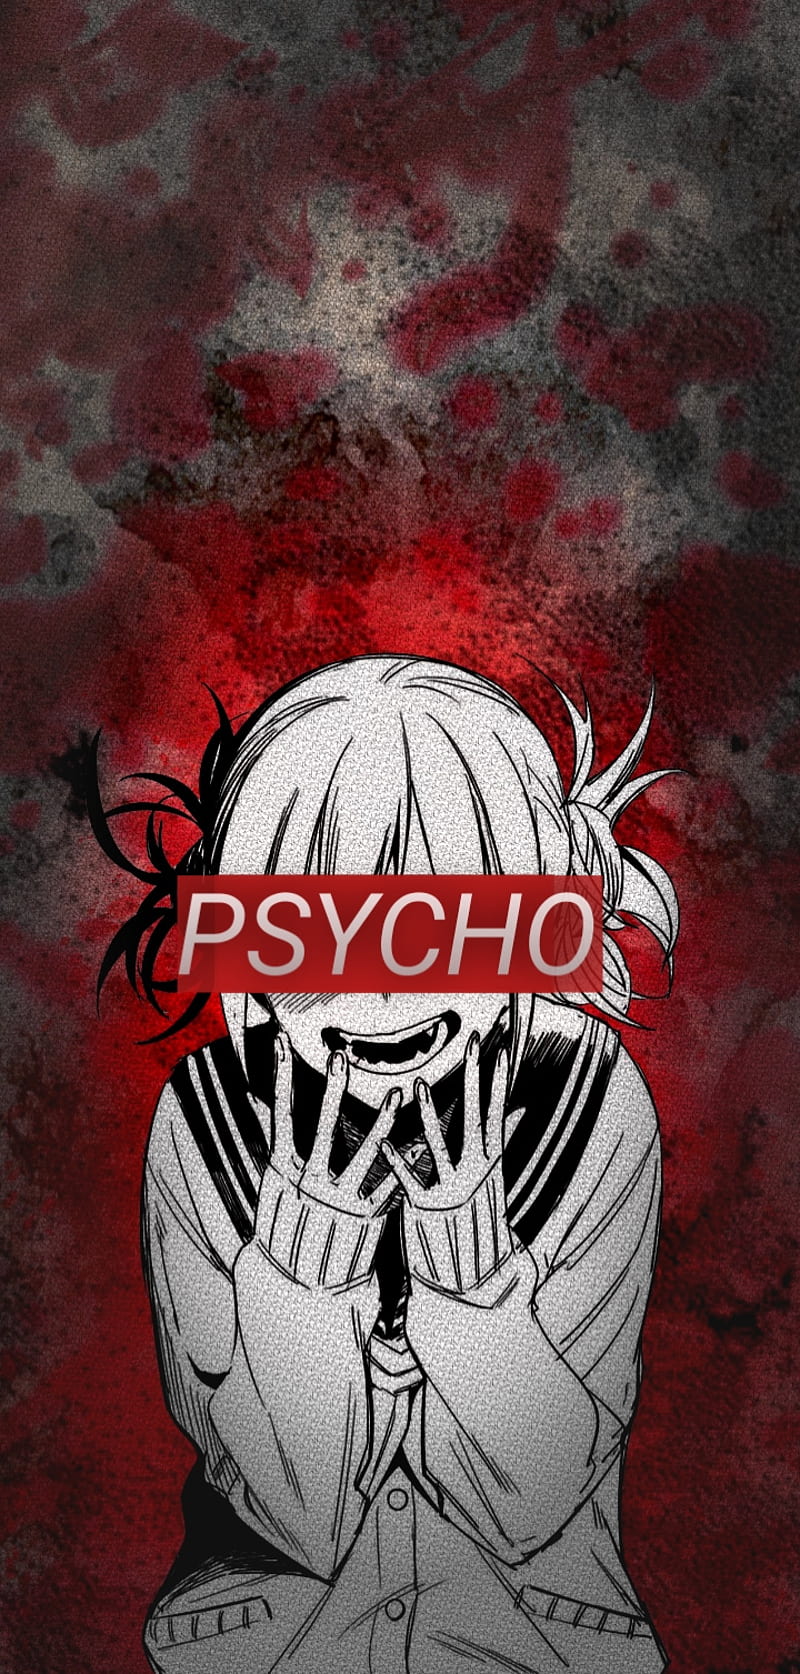 Psycho wallpaper